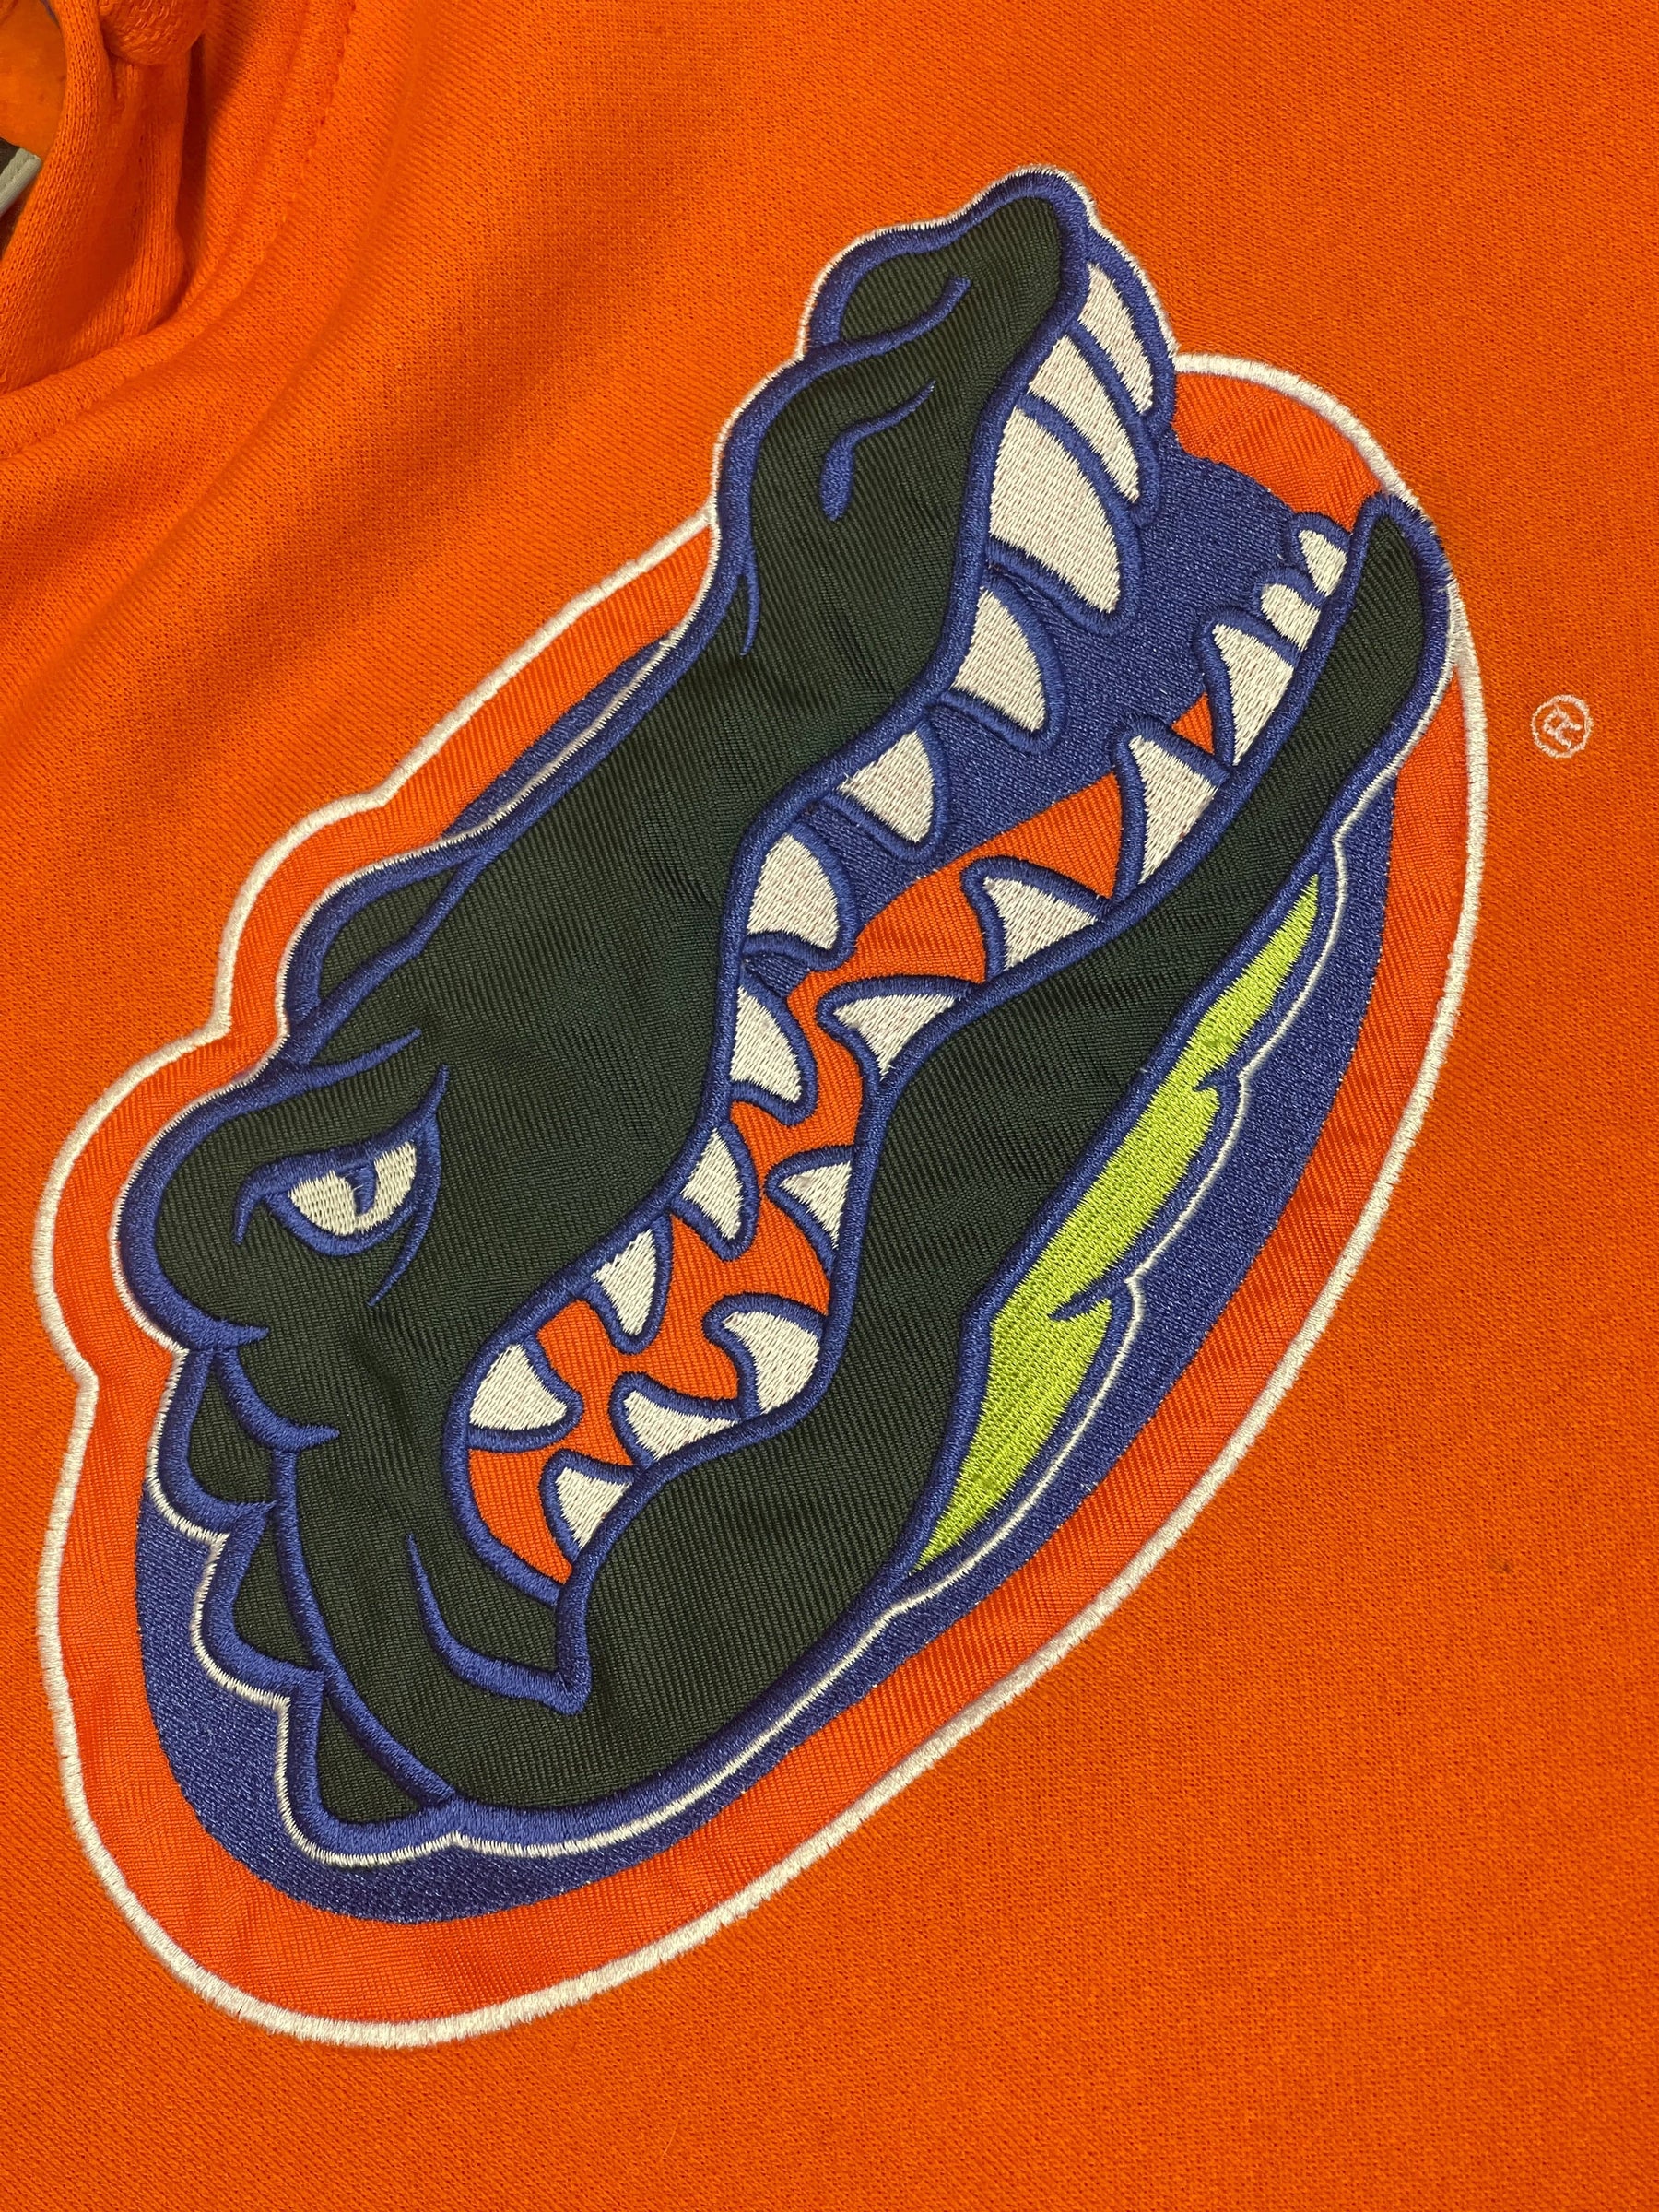 NCAA Florida Gators Orange Stitched Pullover Hoodie Men's X-Large